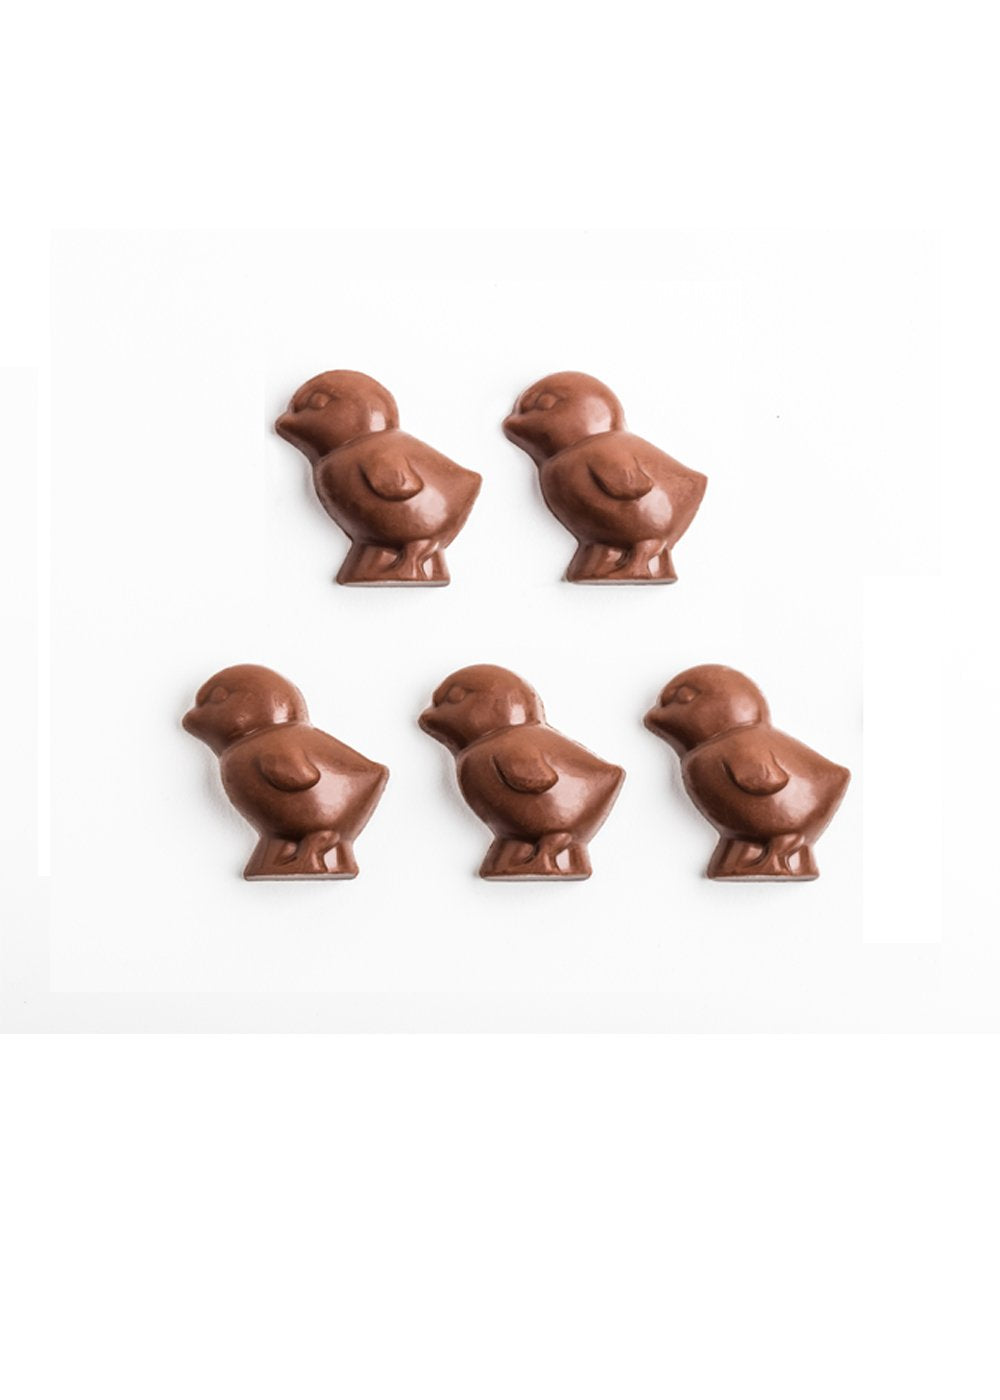 Wholesale Madelaine Chocolate Mini Chicks - 30 Lb Box Bulk